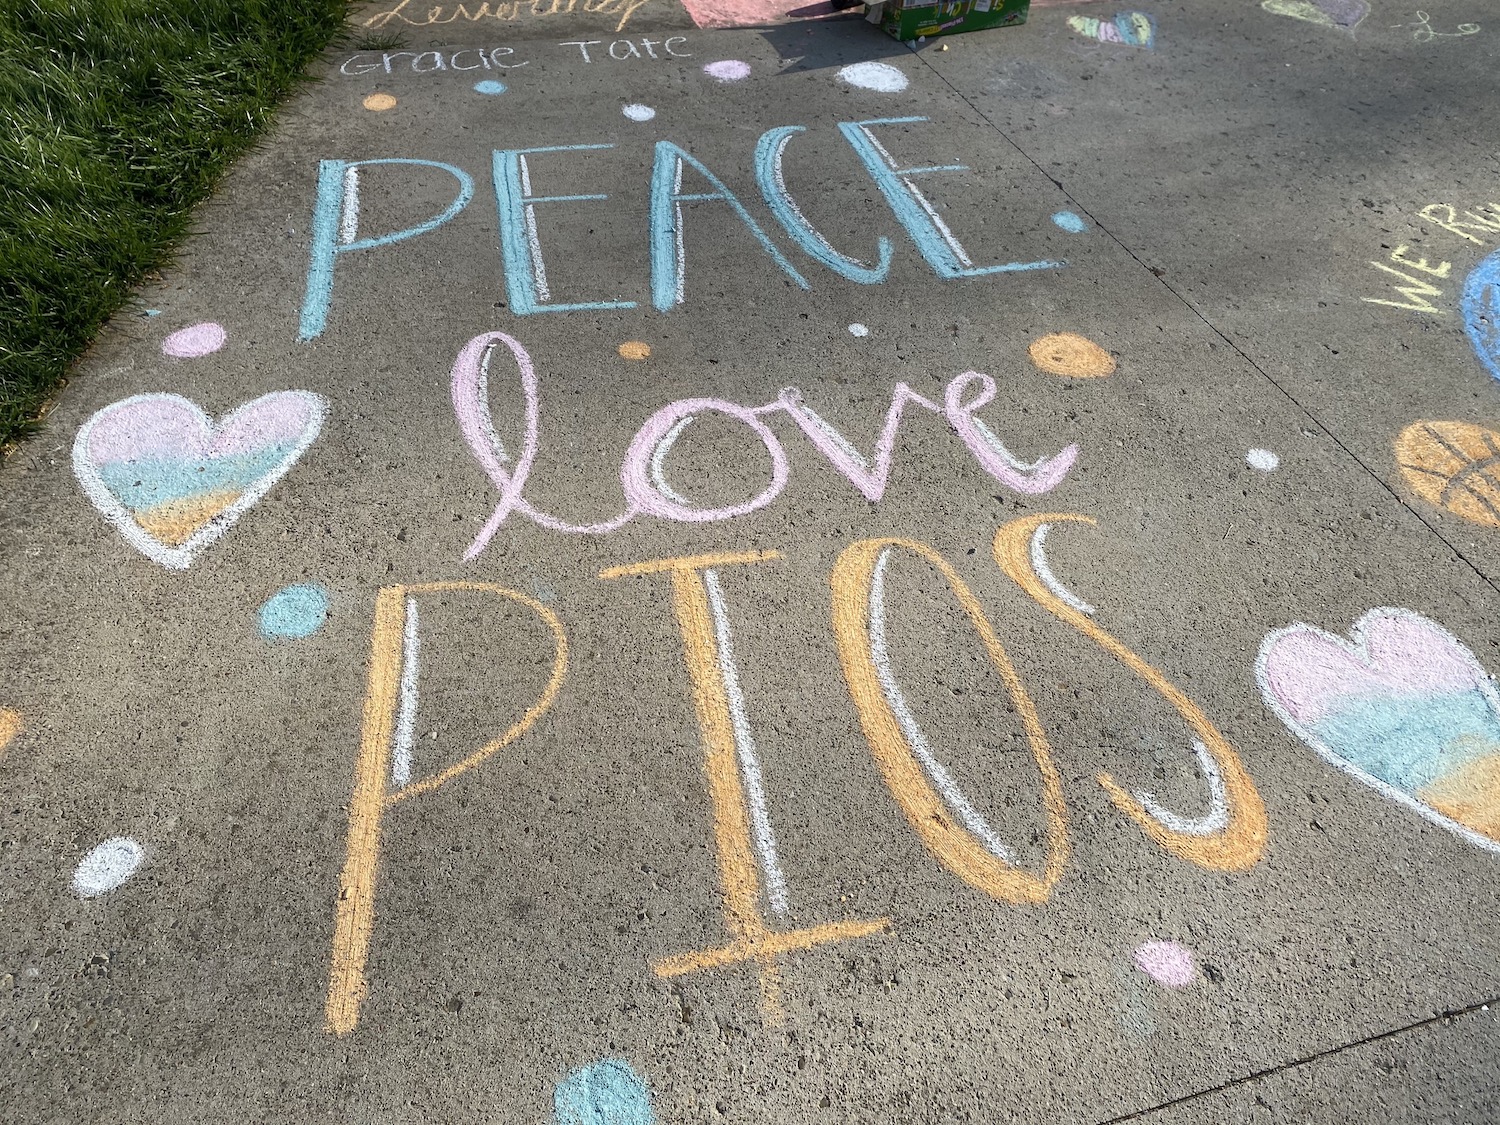 Sidewalk chalk which reads: PEACE love PIOS